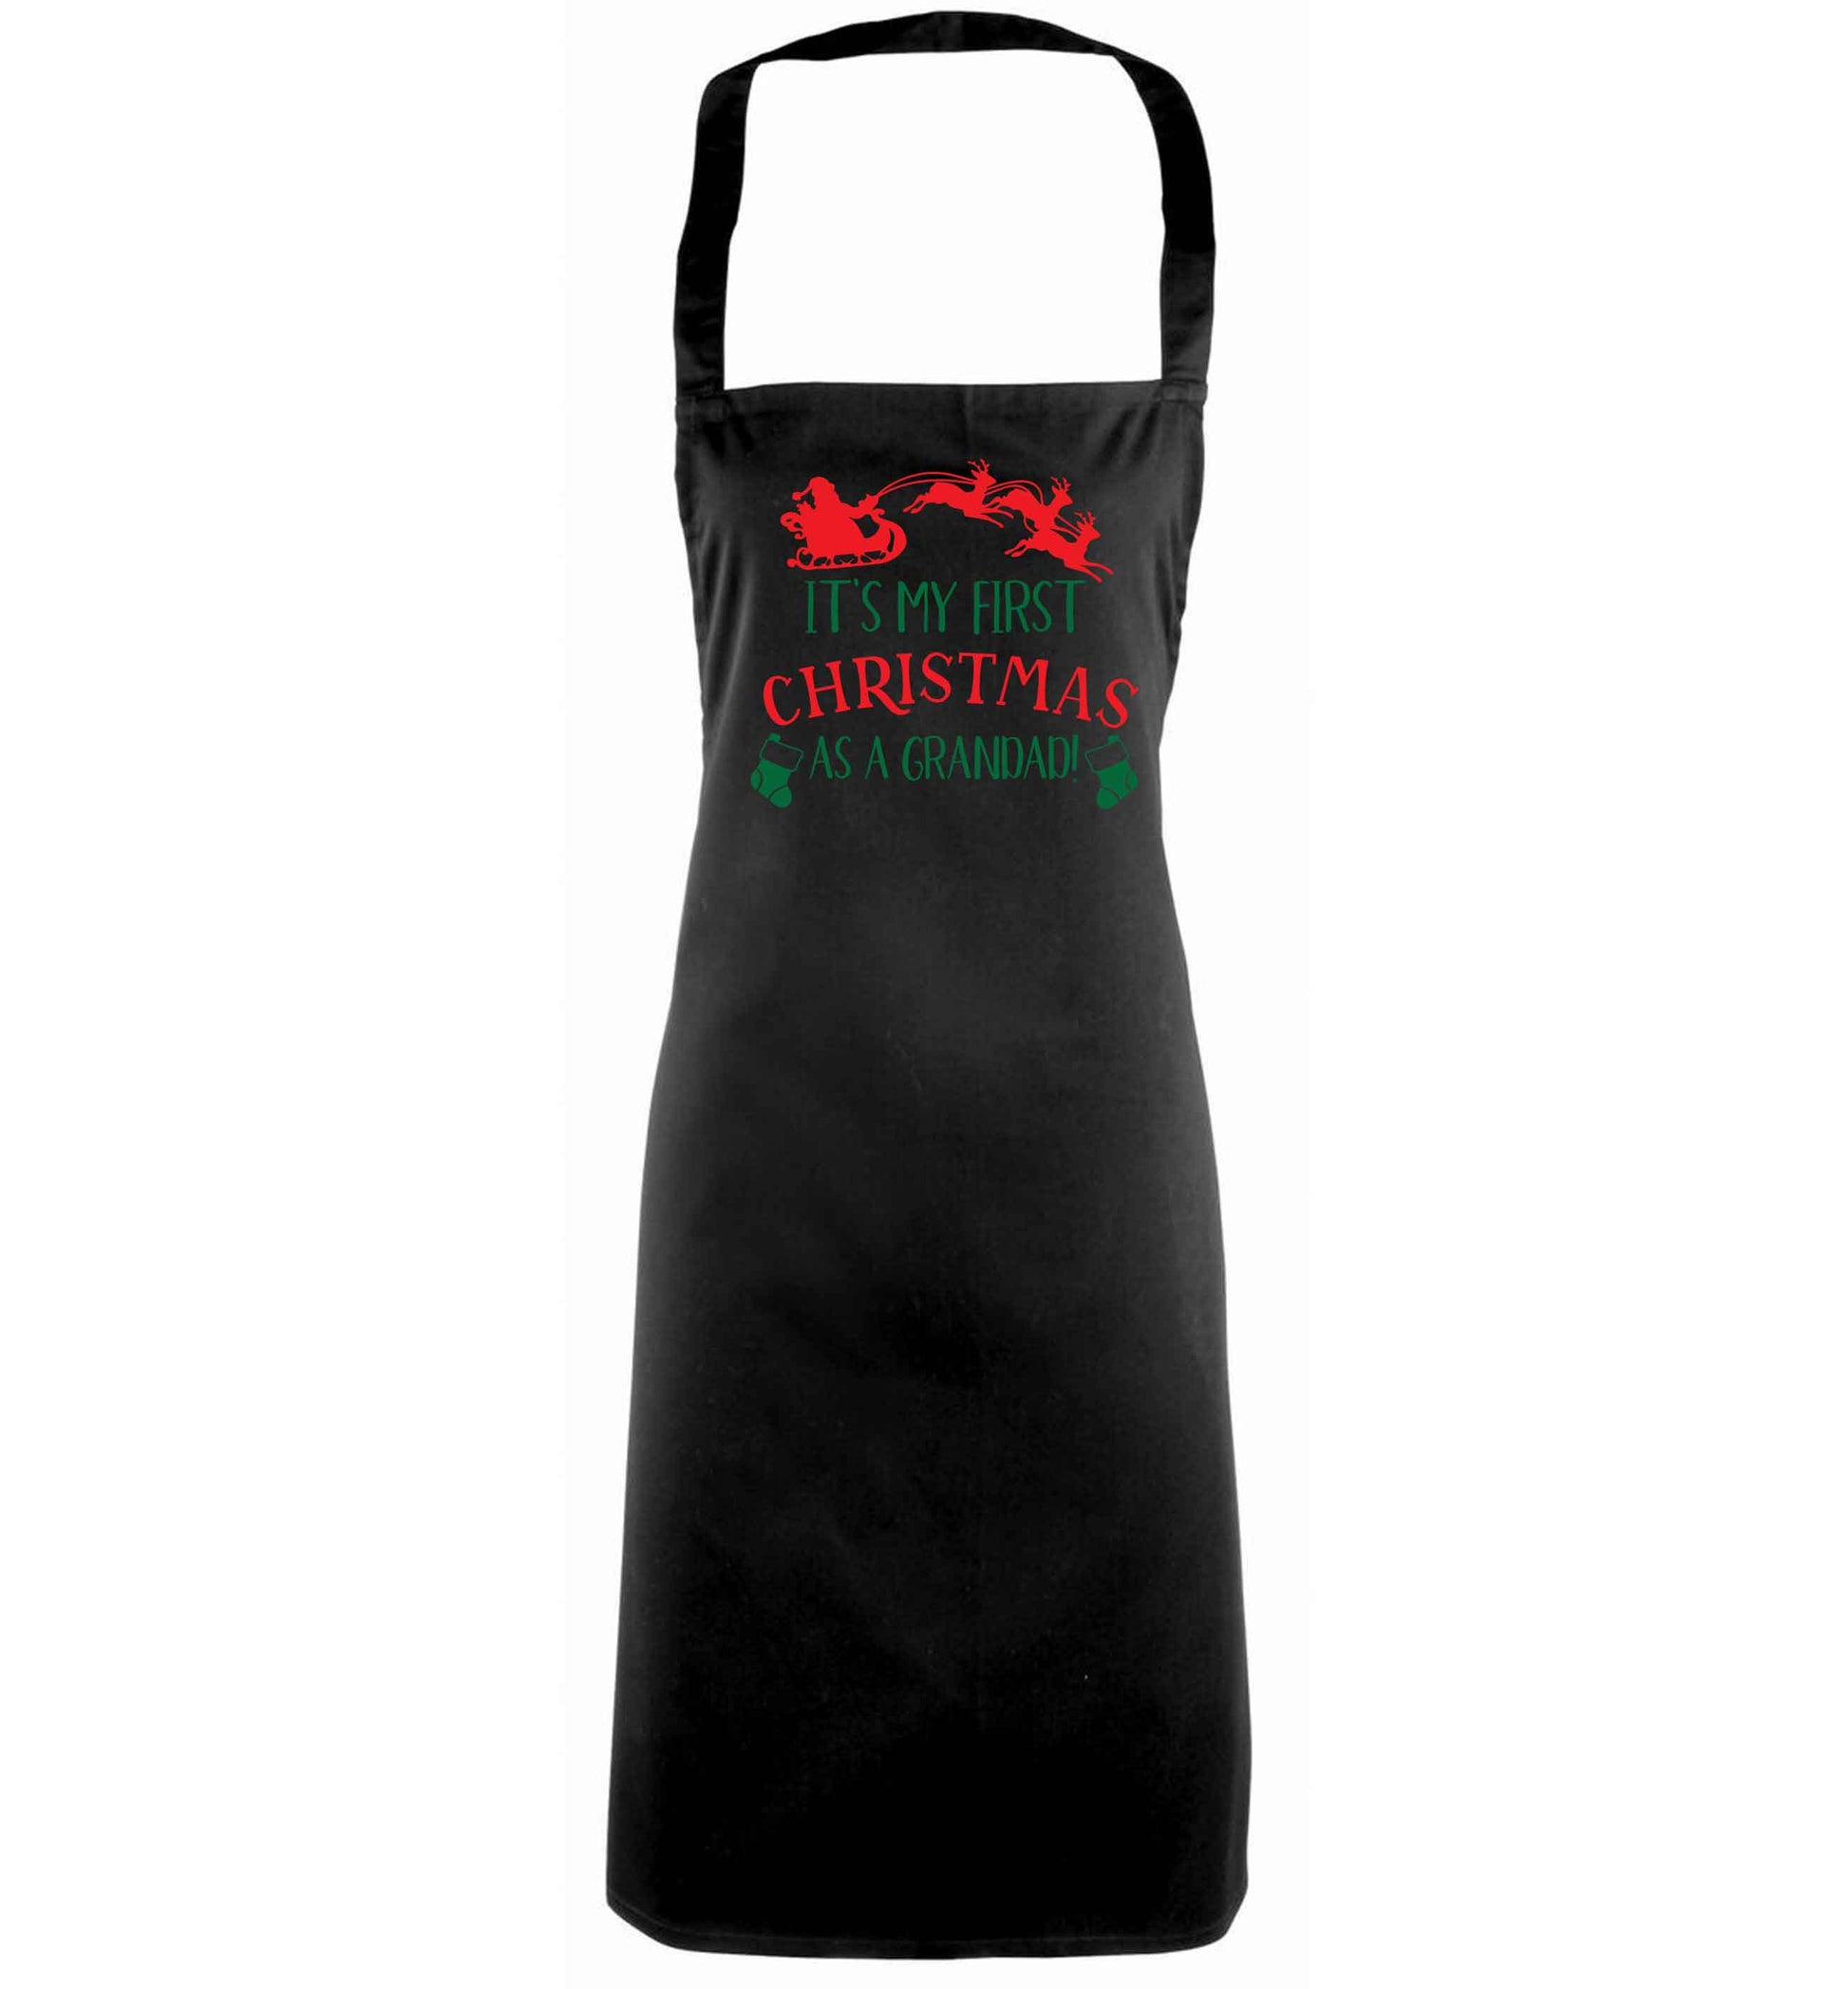 It's my first Christmas as a grandad! black apron